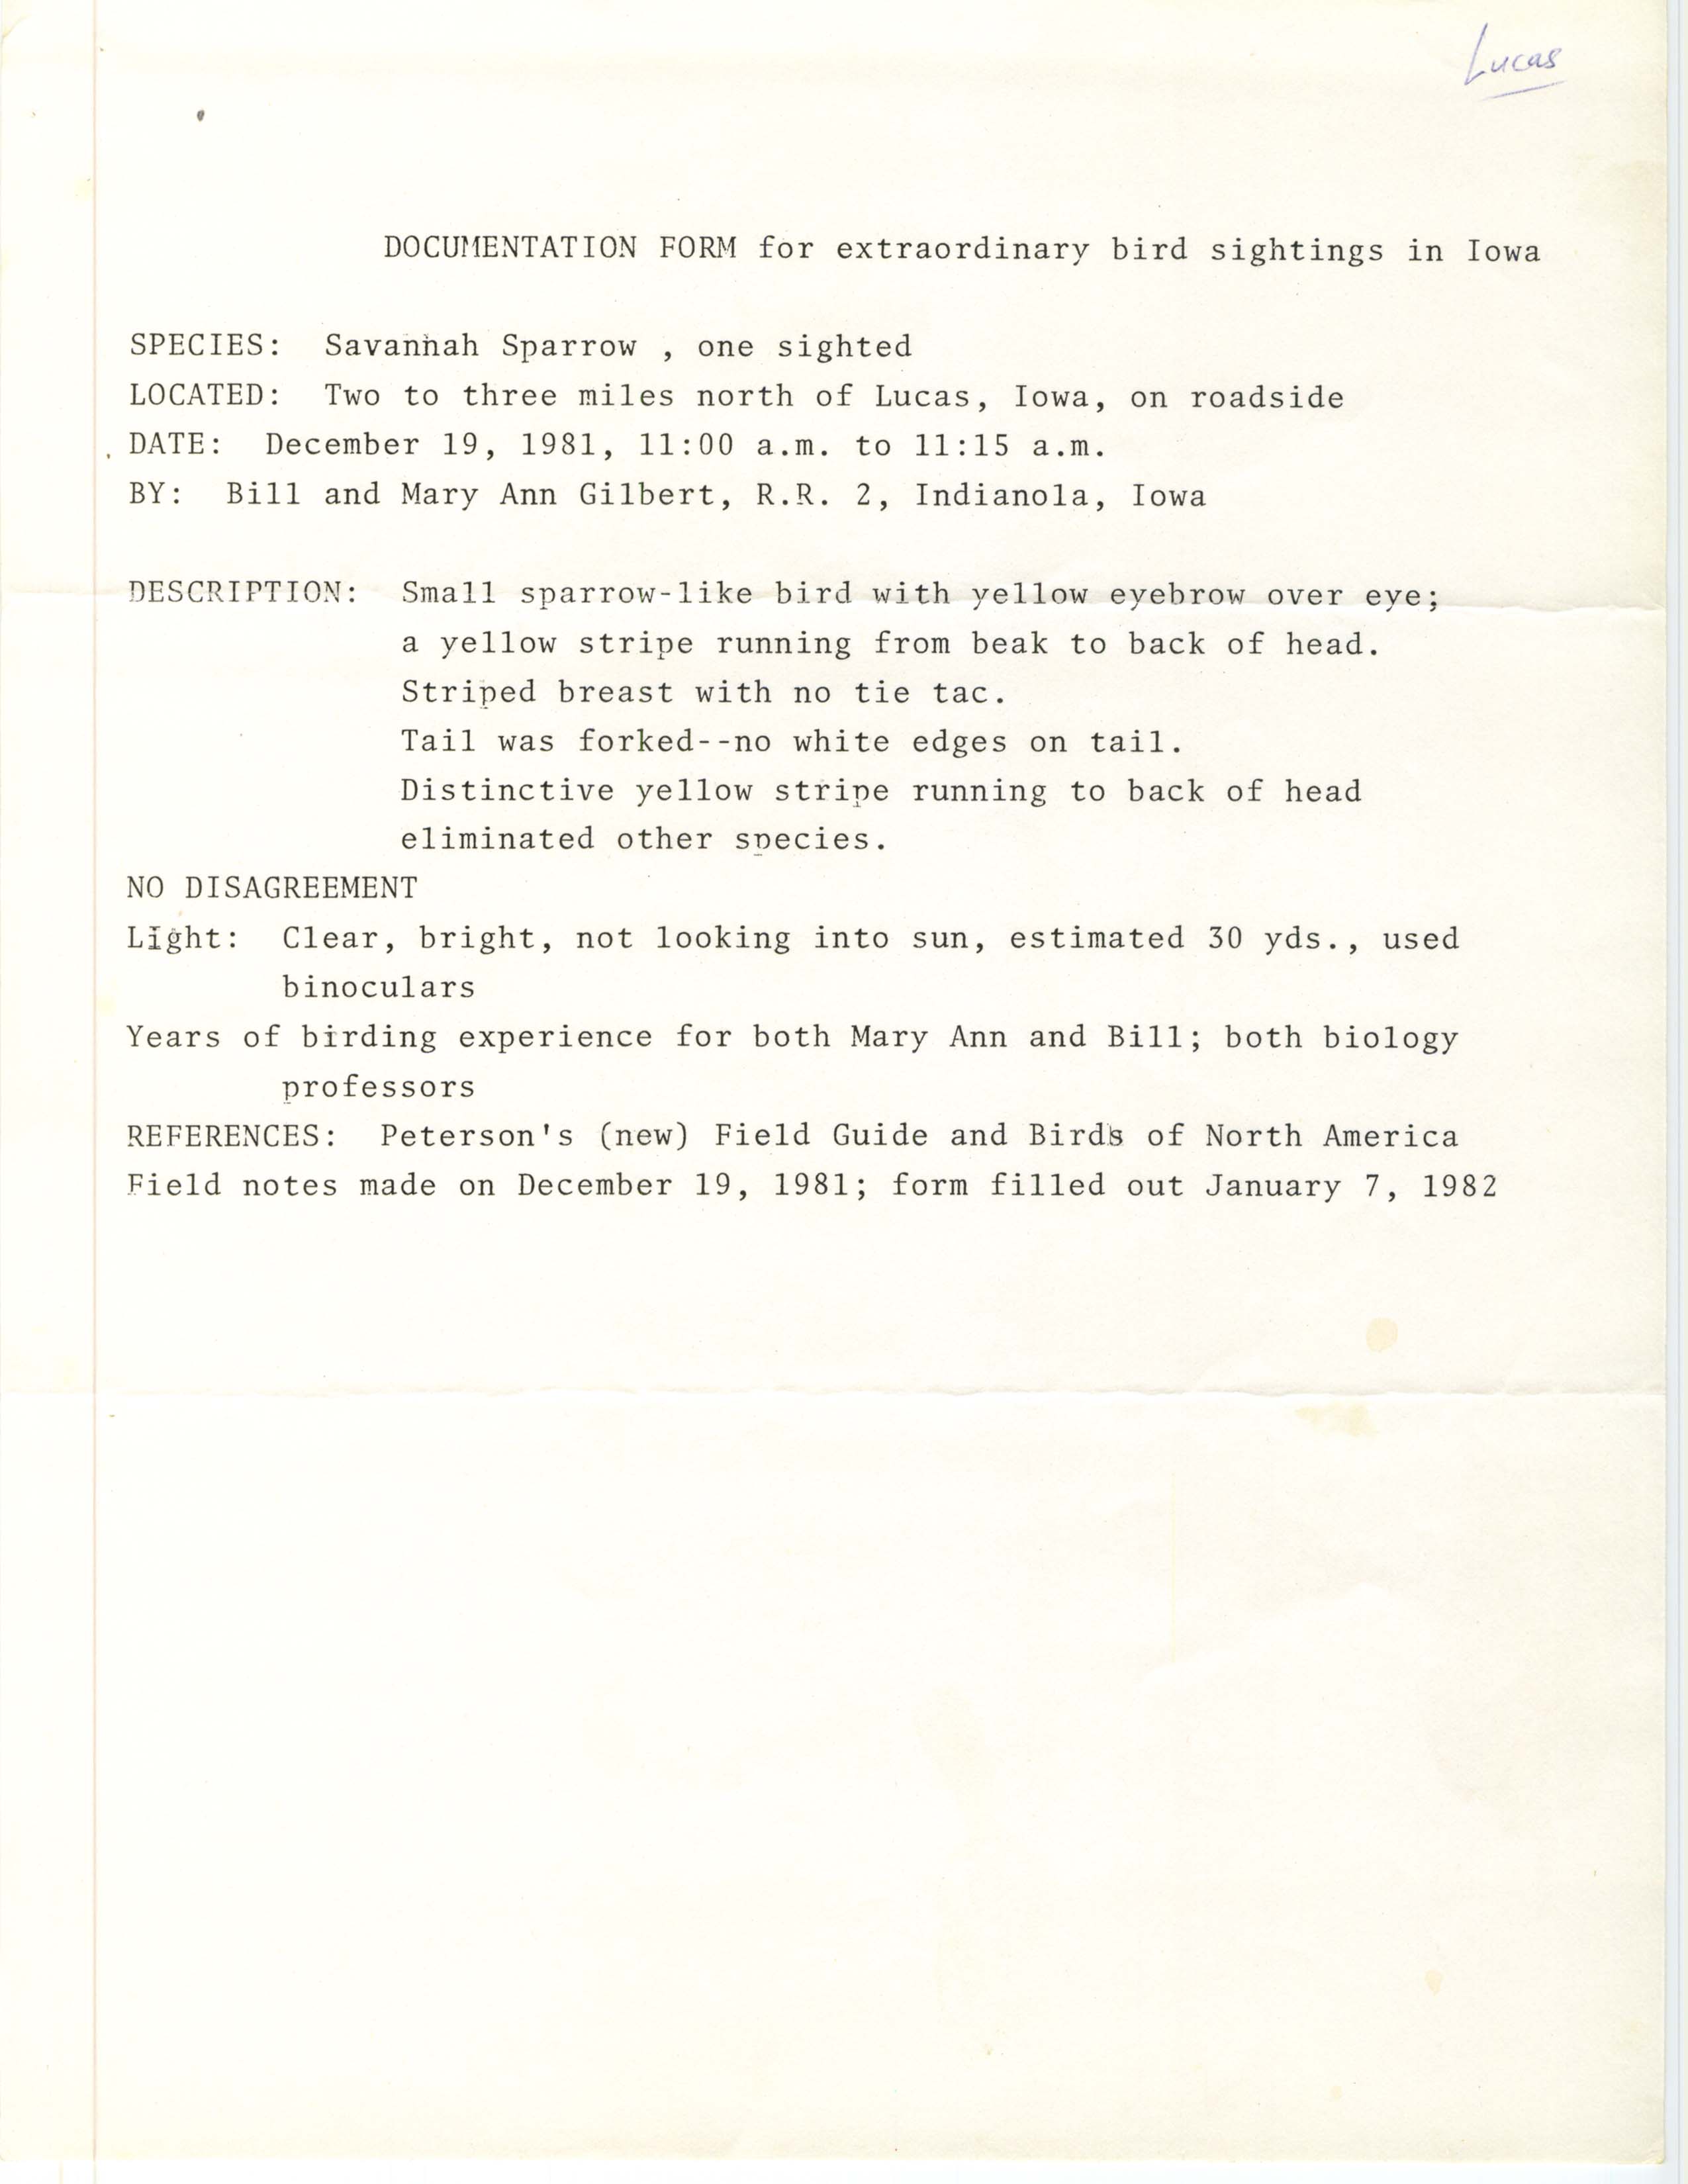 Rare bird documentation form for Savannah Sparrow north of Lucas, 1981